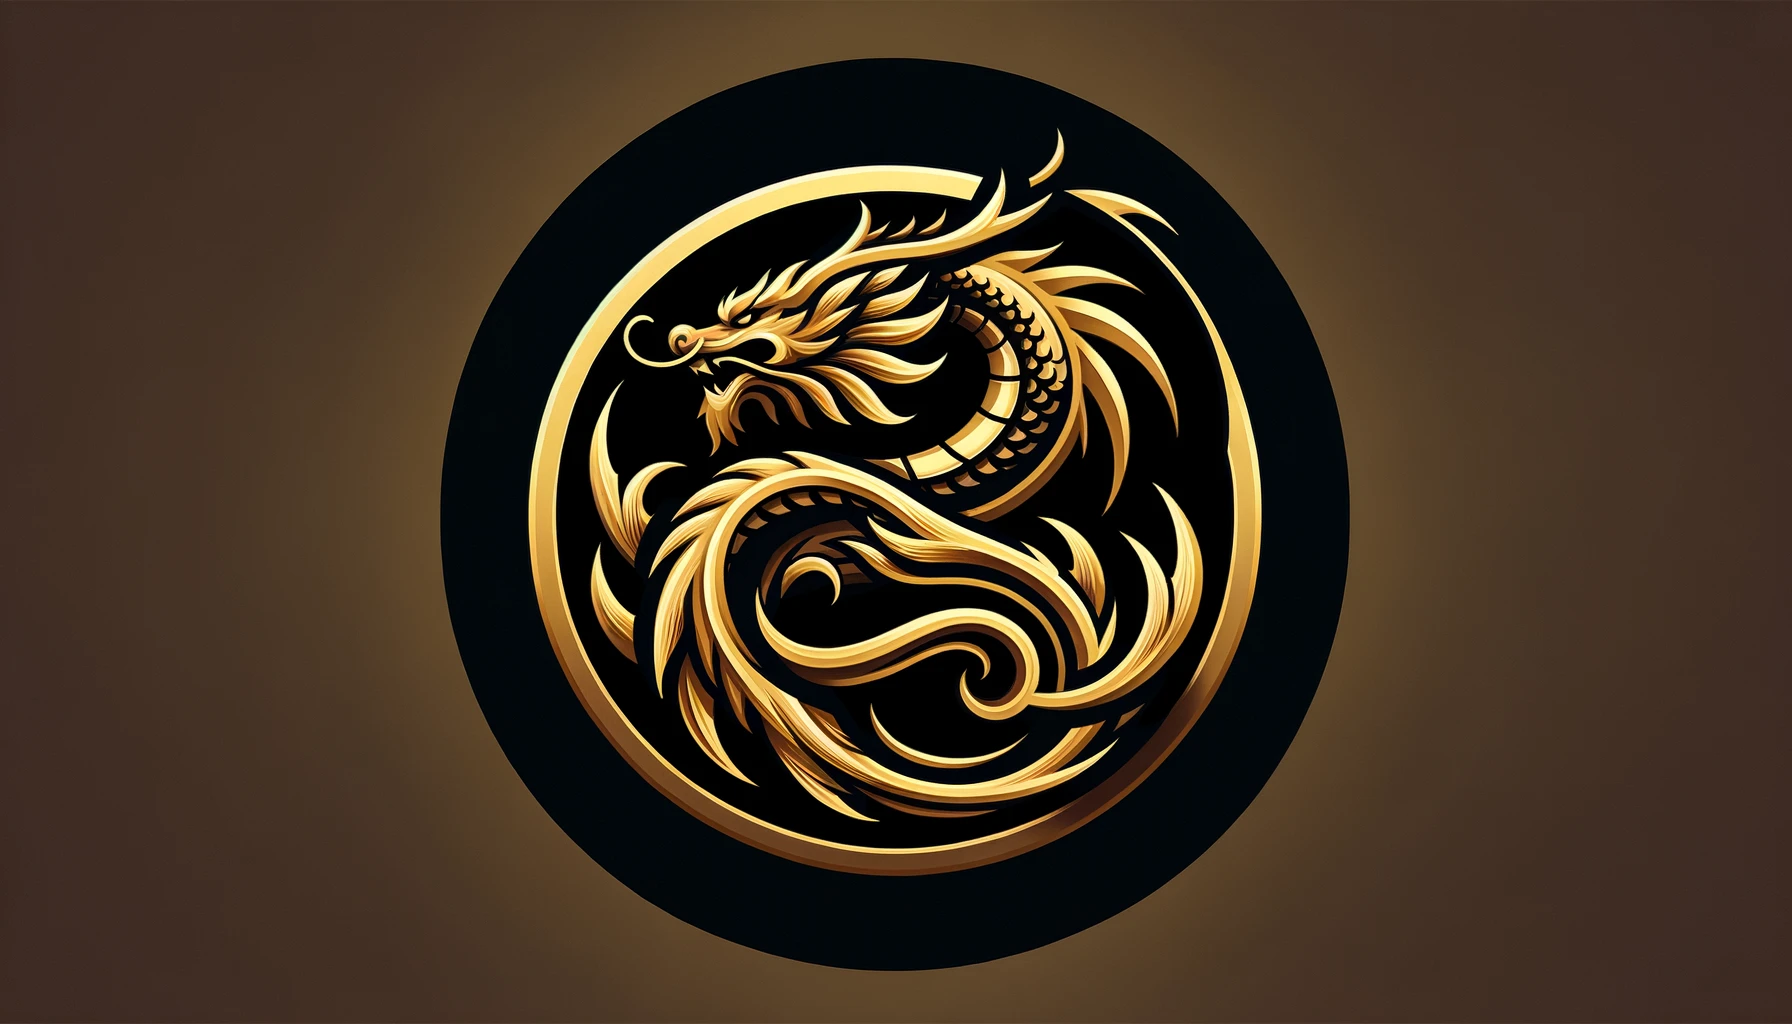 Golden Dragon marketing logo